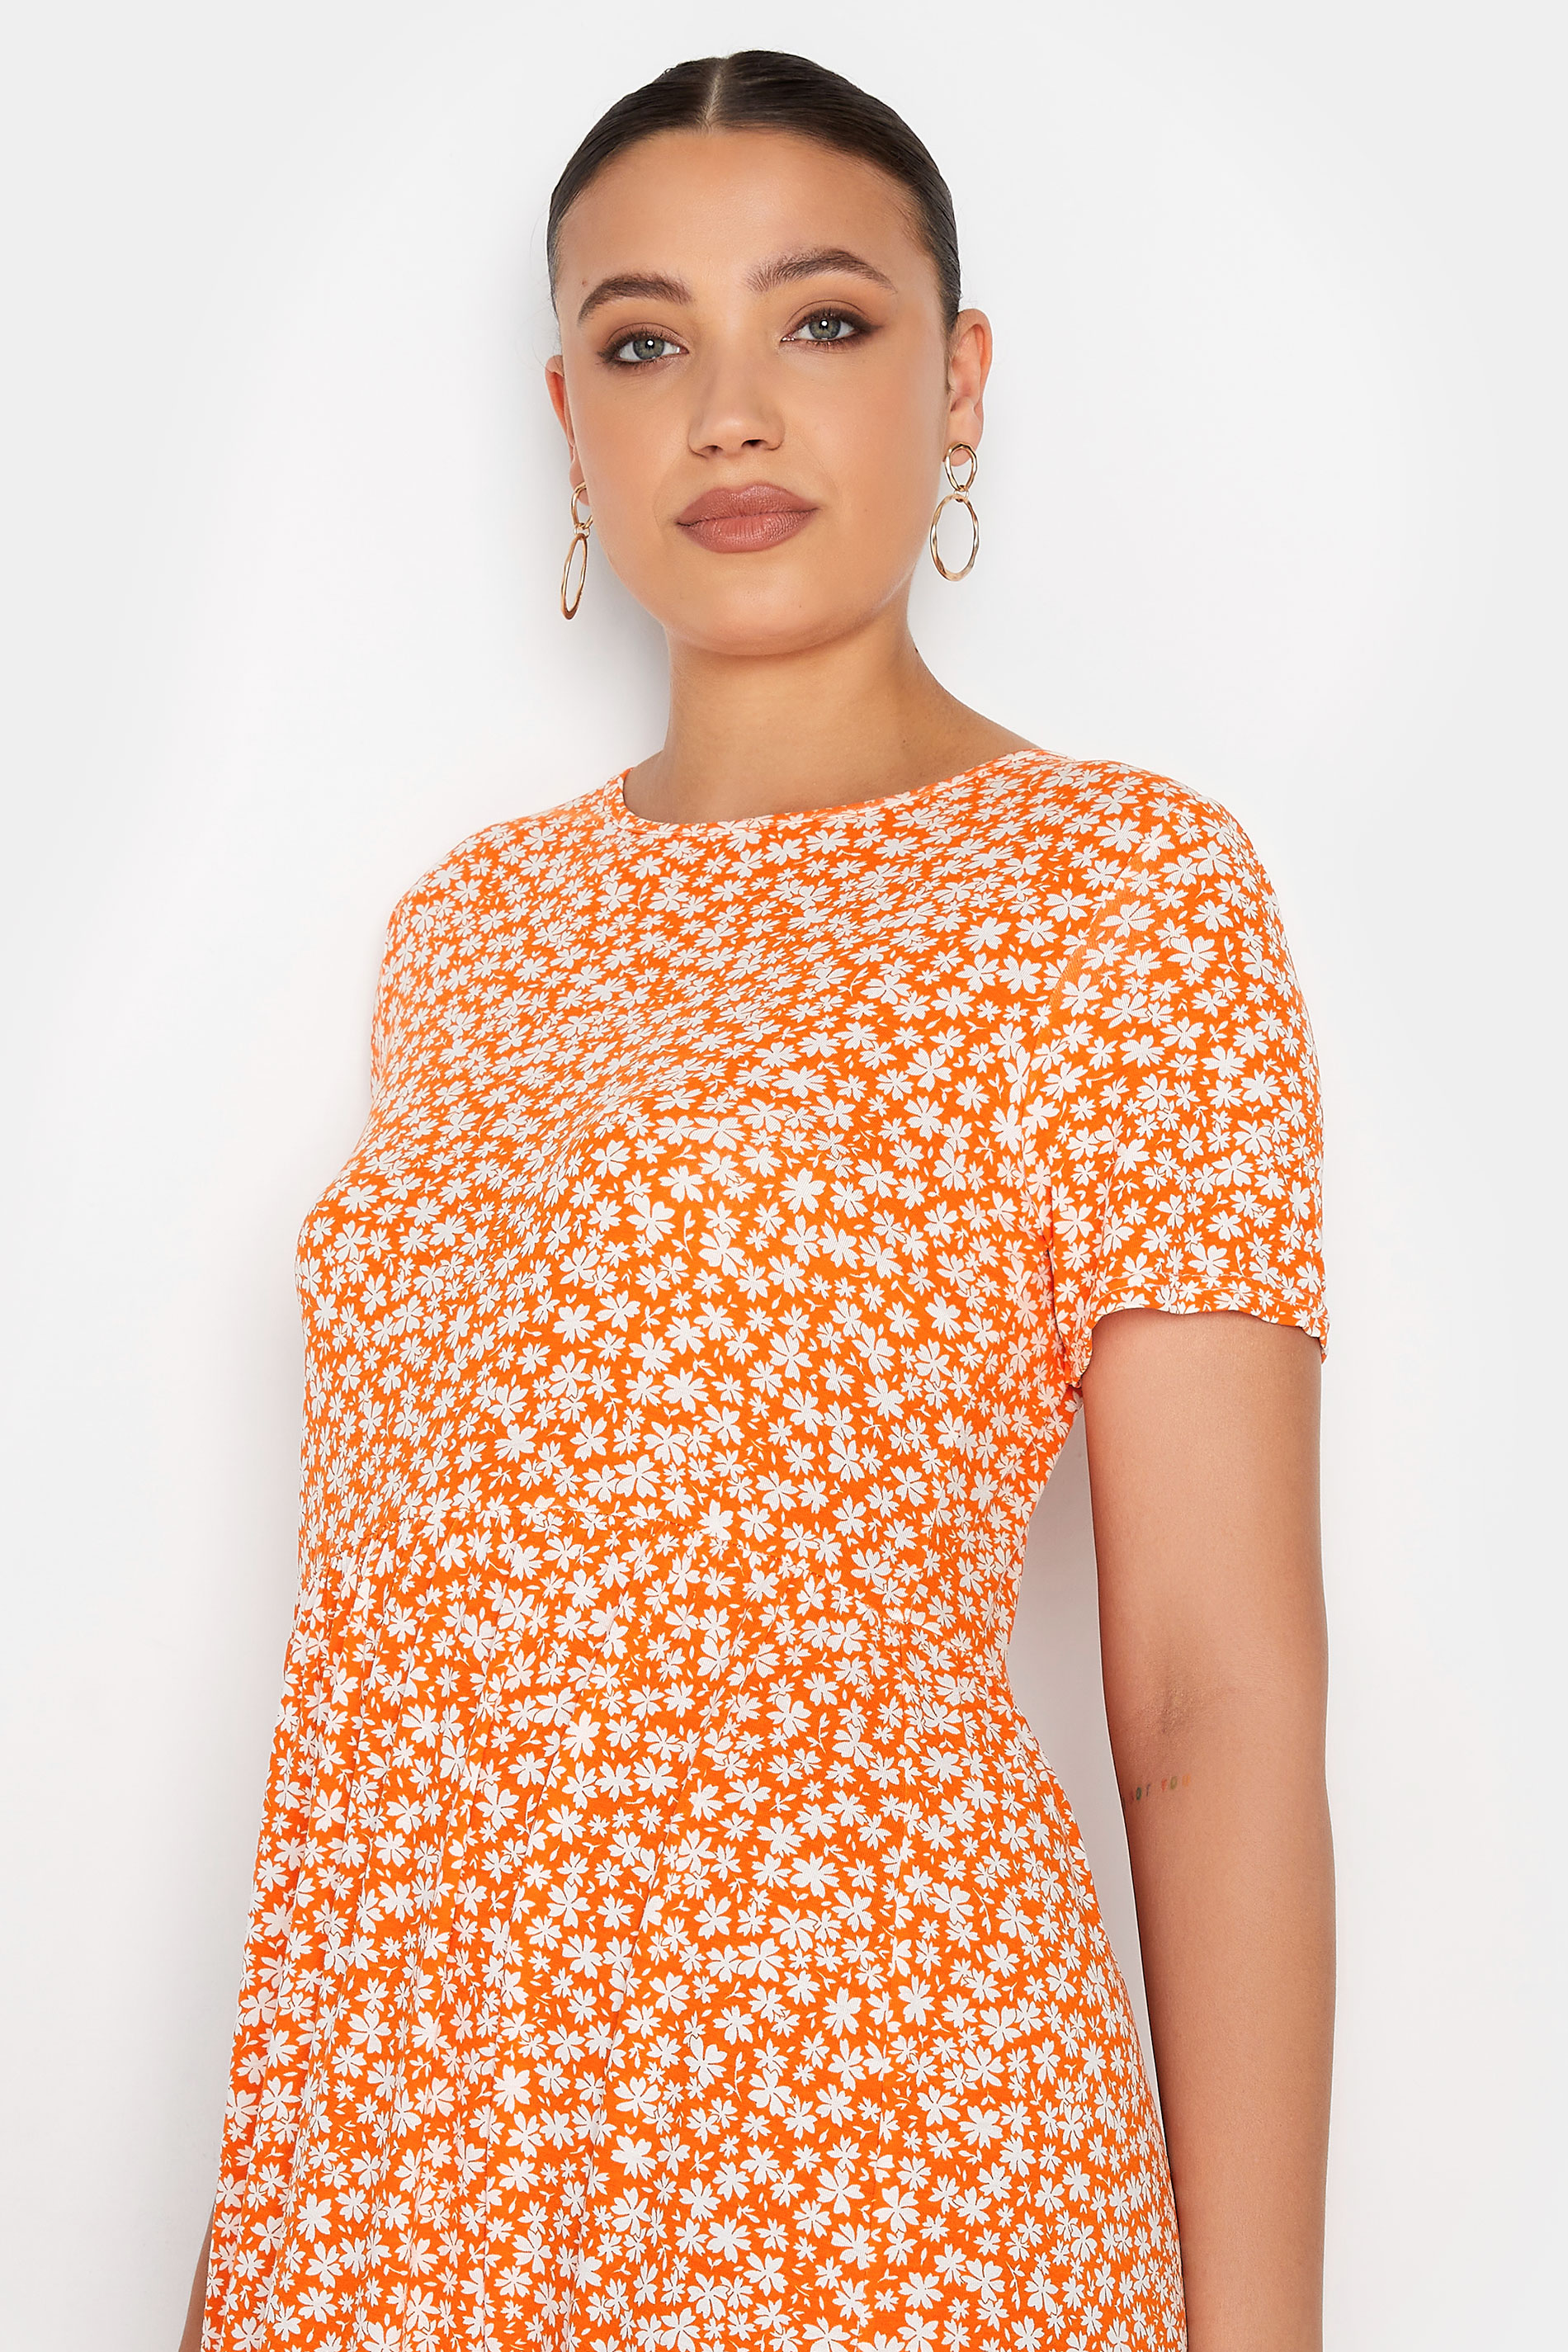 LTS Tall Women's Orange Ditsy Print Maxi Dress | Long Tall Sally  3